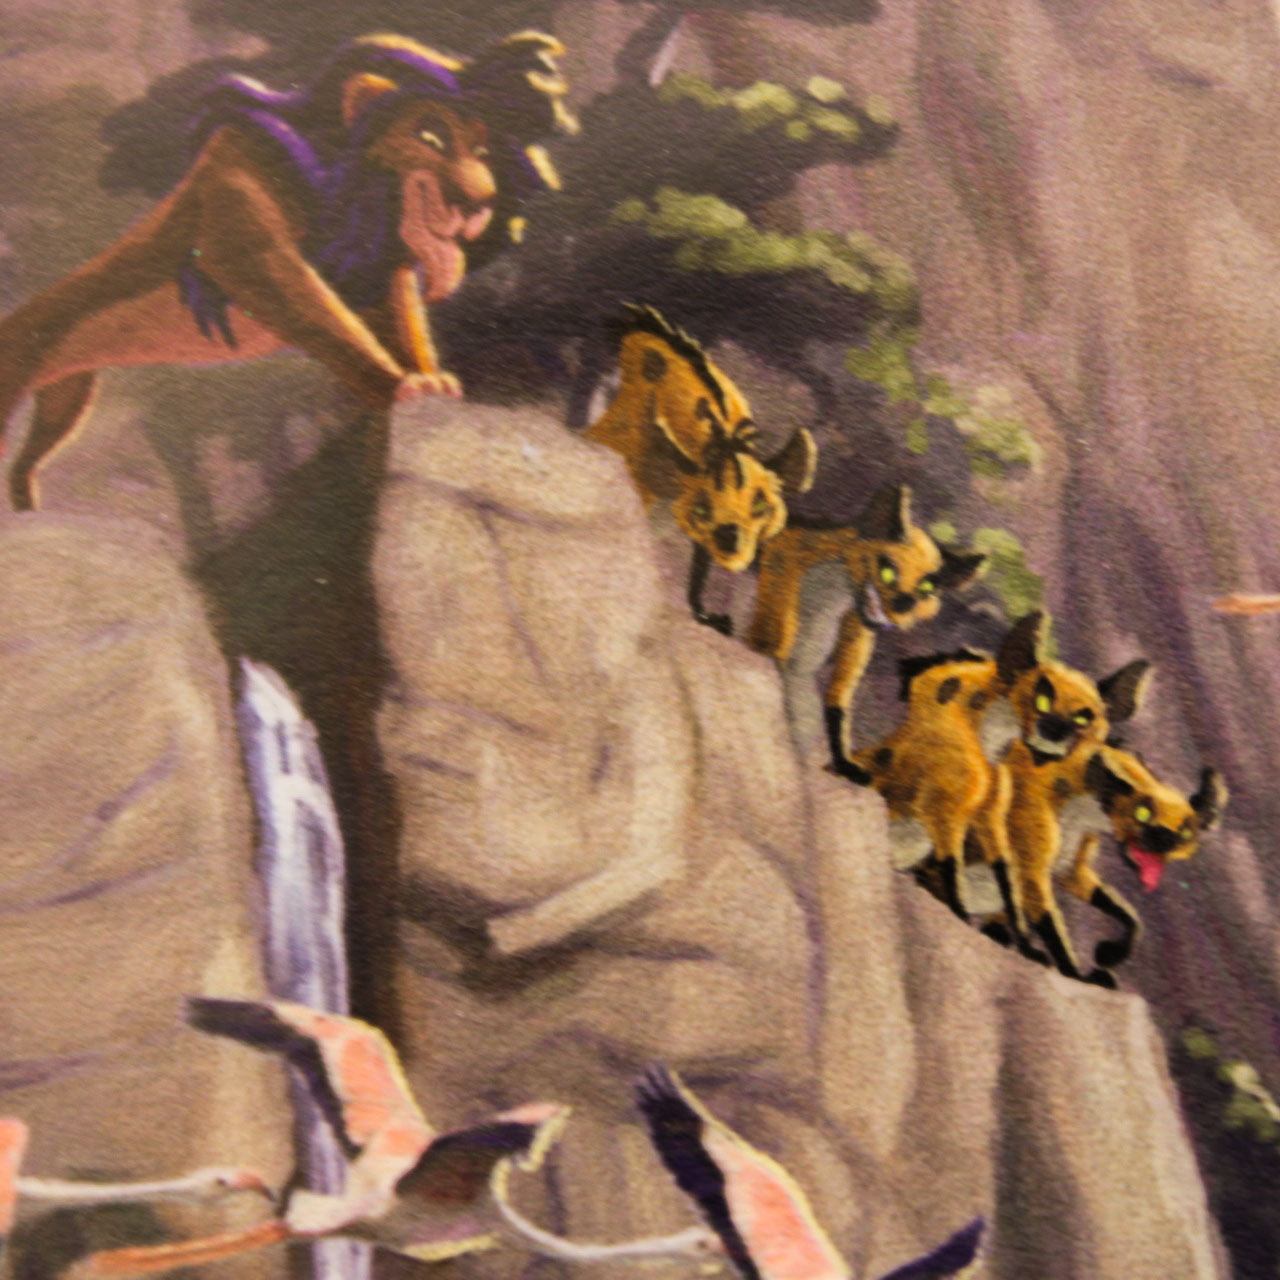 Return to Pride Rock (The Lion King) Disney Framed Art Print